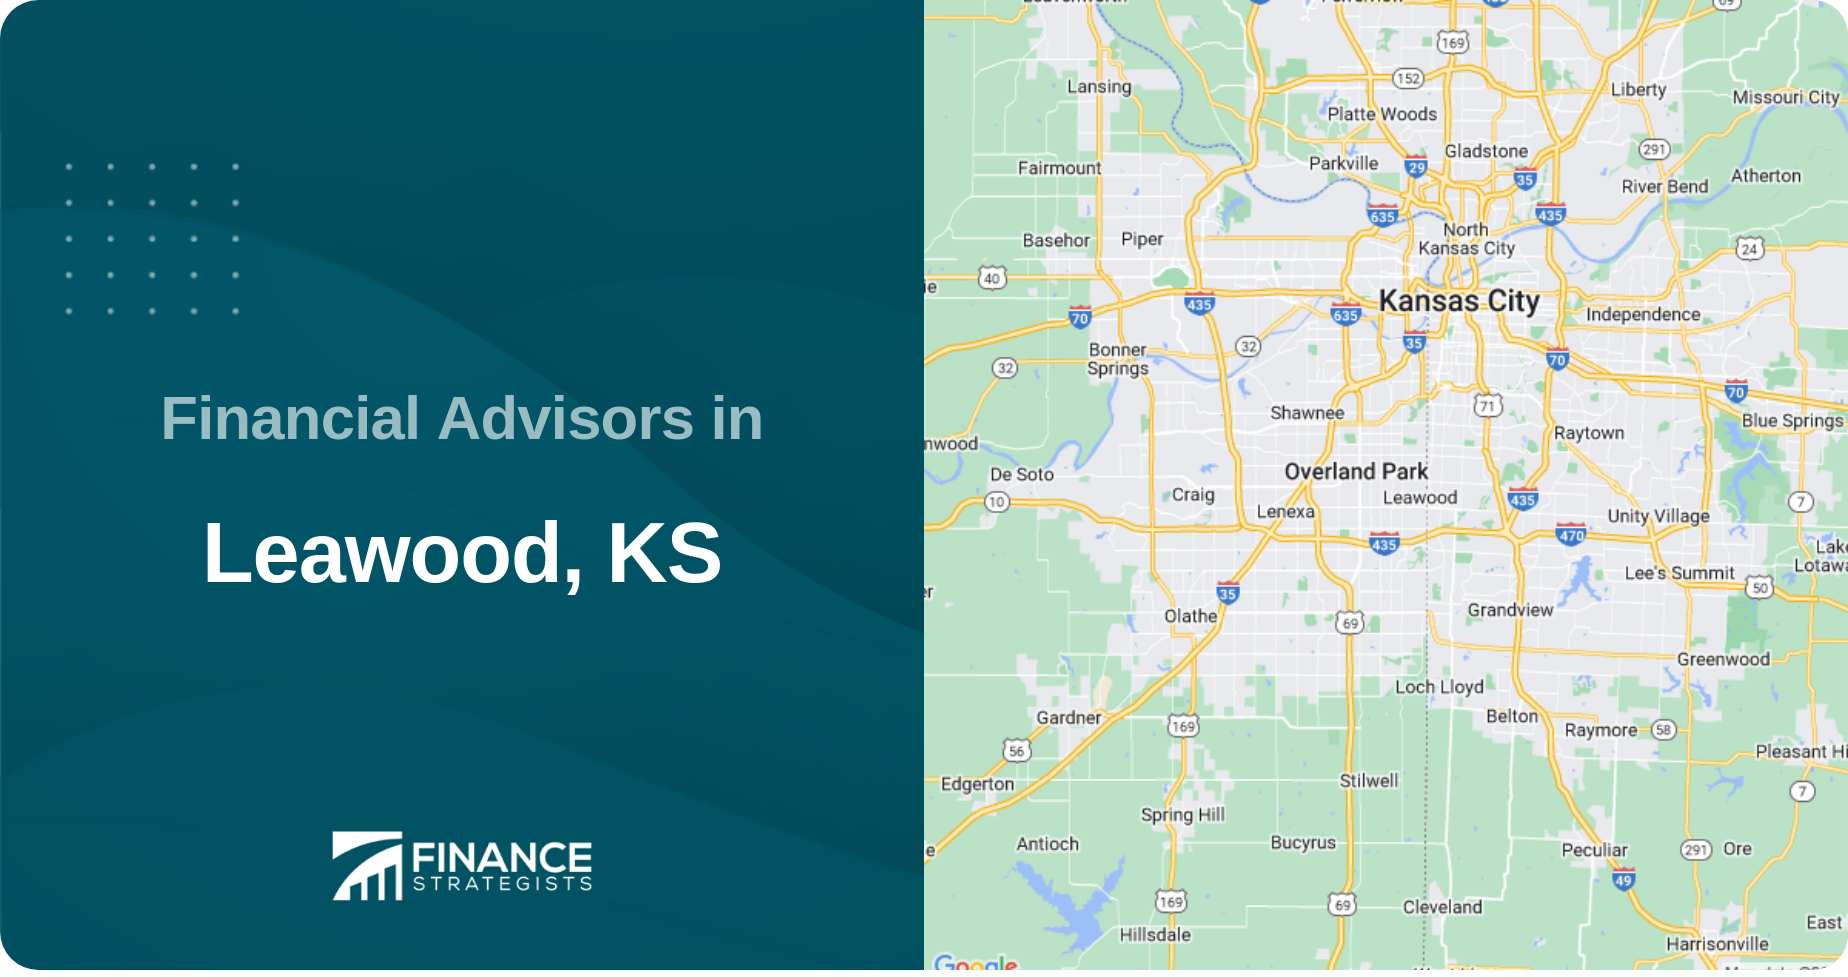 Financial Advisors in Leawood, KS